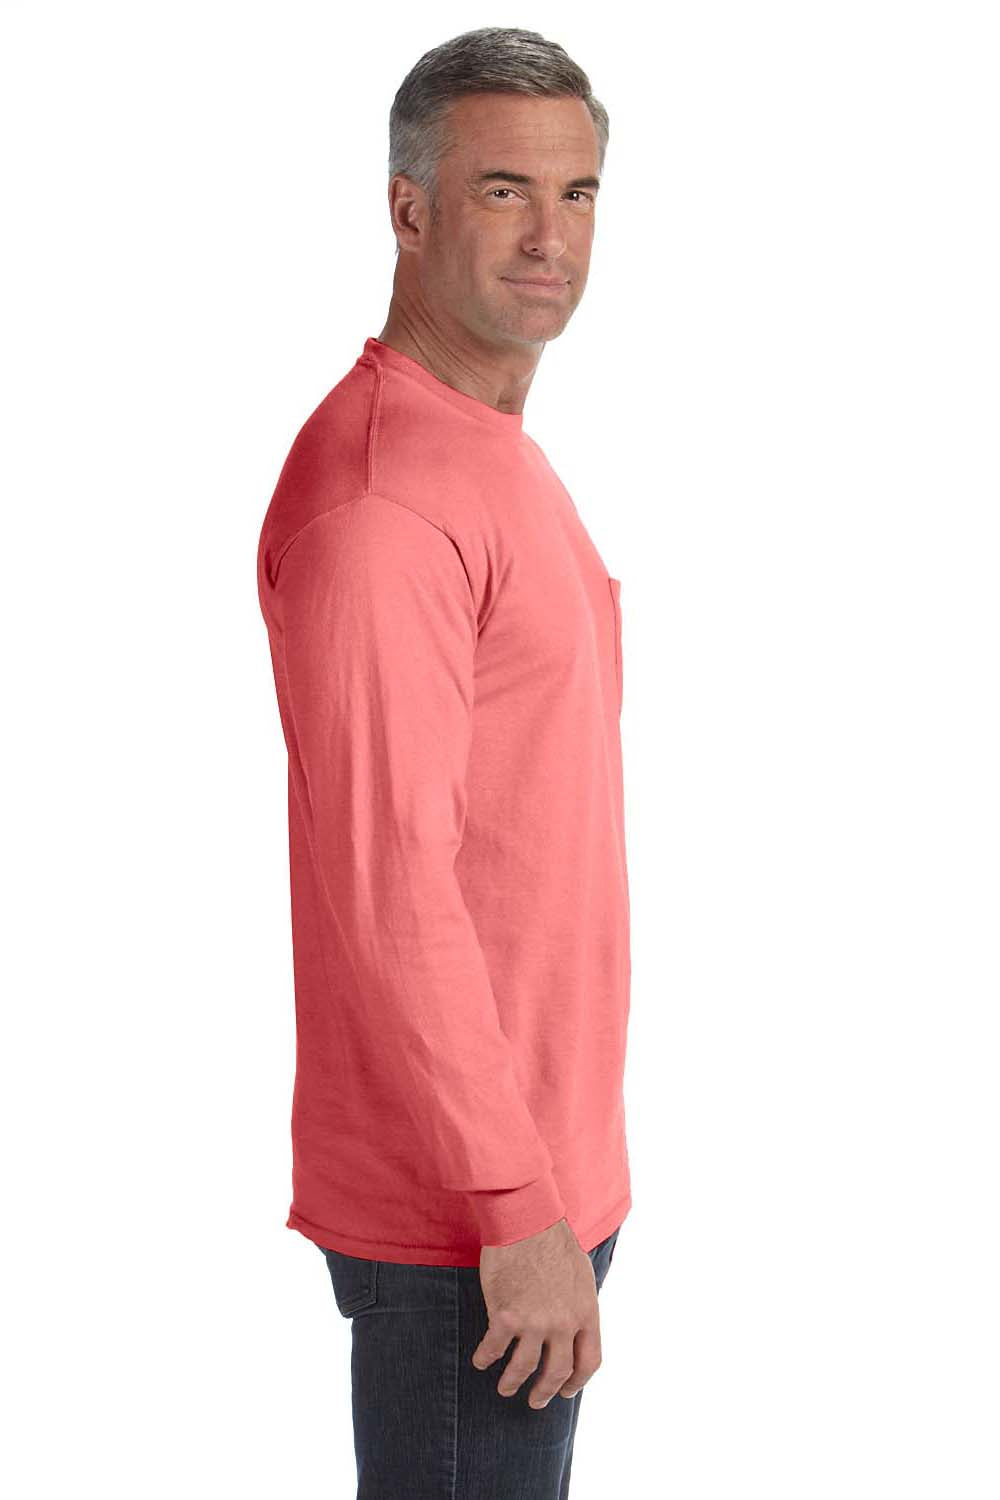 Comfort Colors C4410 Mens Long Sleeve Crewneck T-Shirt w/ Pocket Watermelon Pink Side